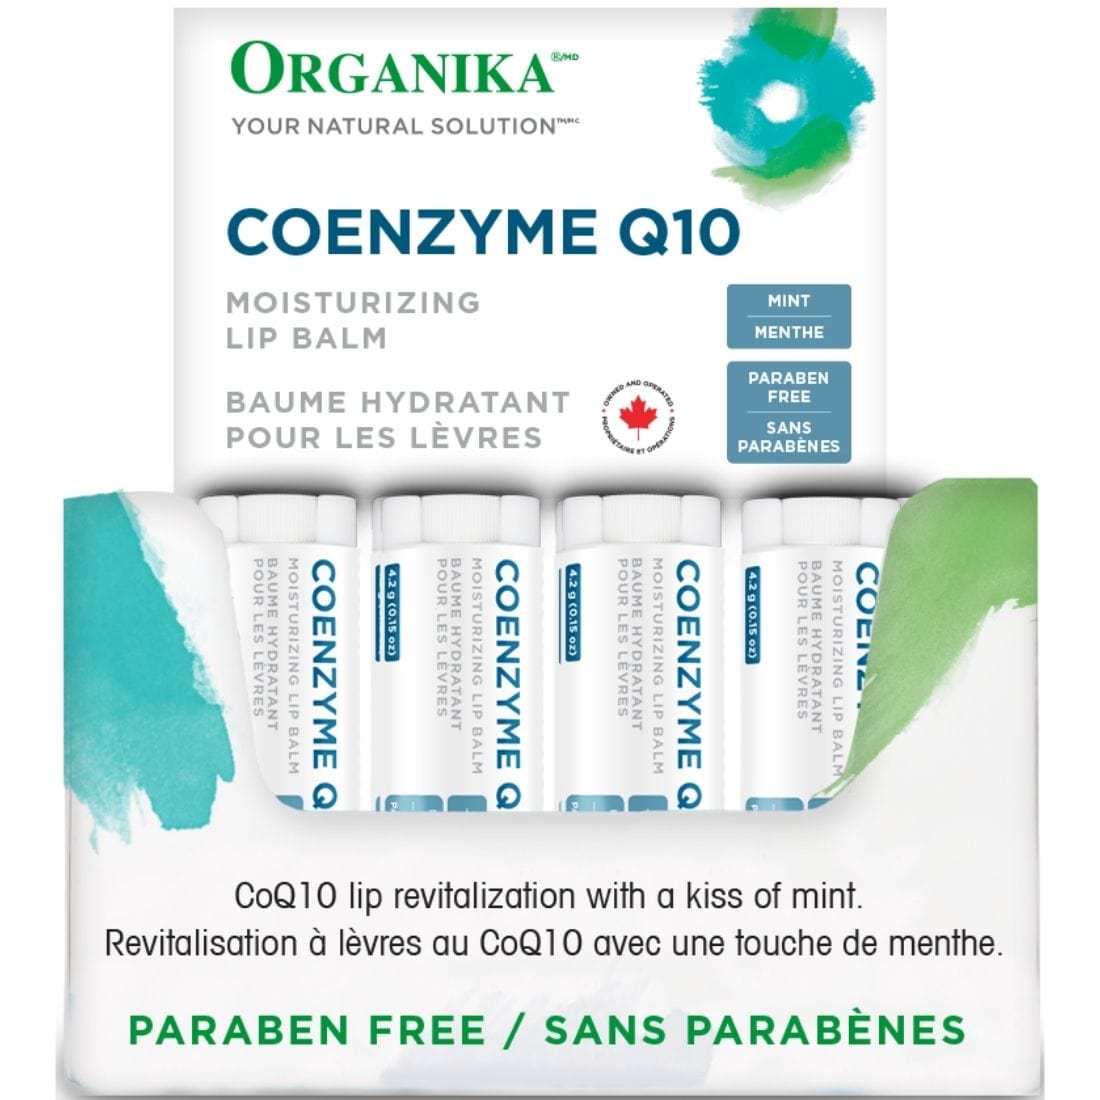 Organika Coenzyme Q10, Moisturizing Lip Balm, 4.2g